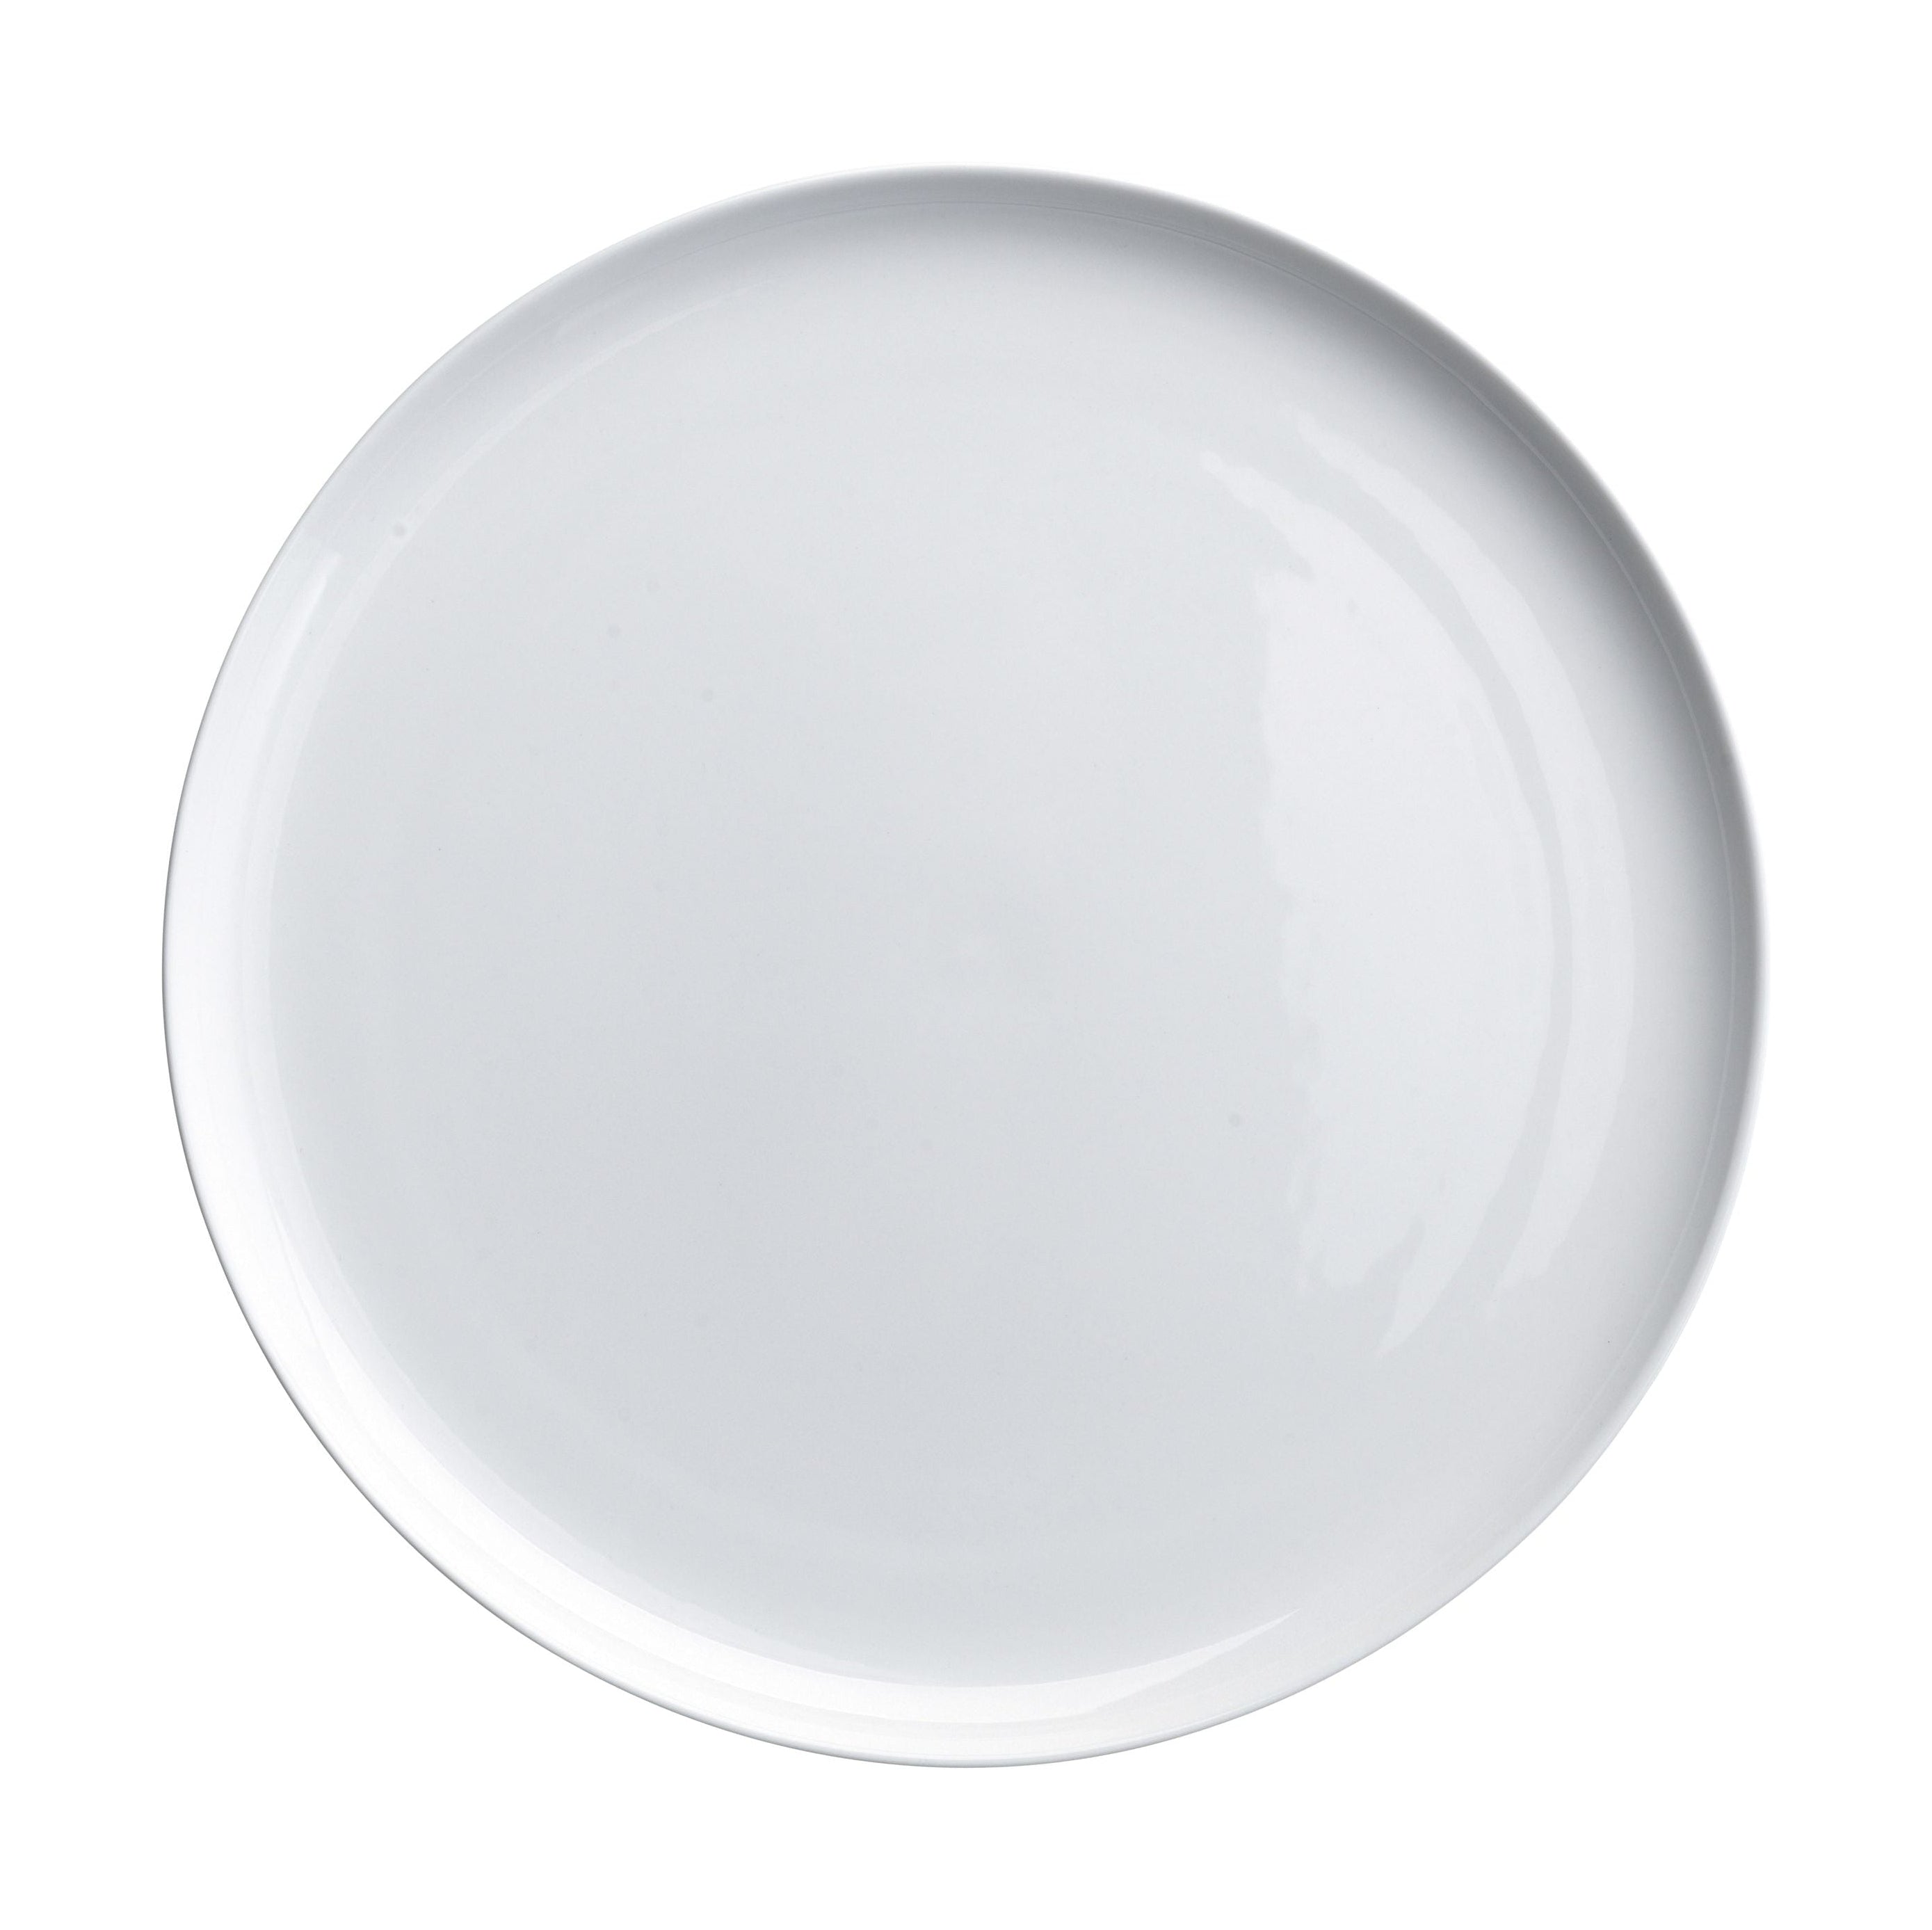 Rörstrand Invwhite Flat Plate, 27 cm